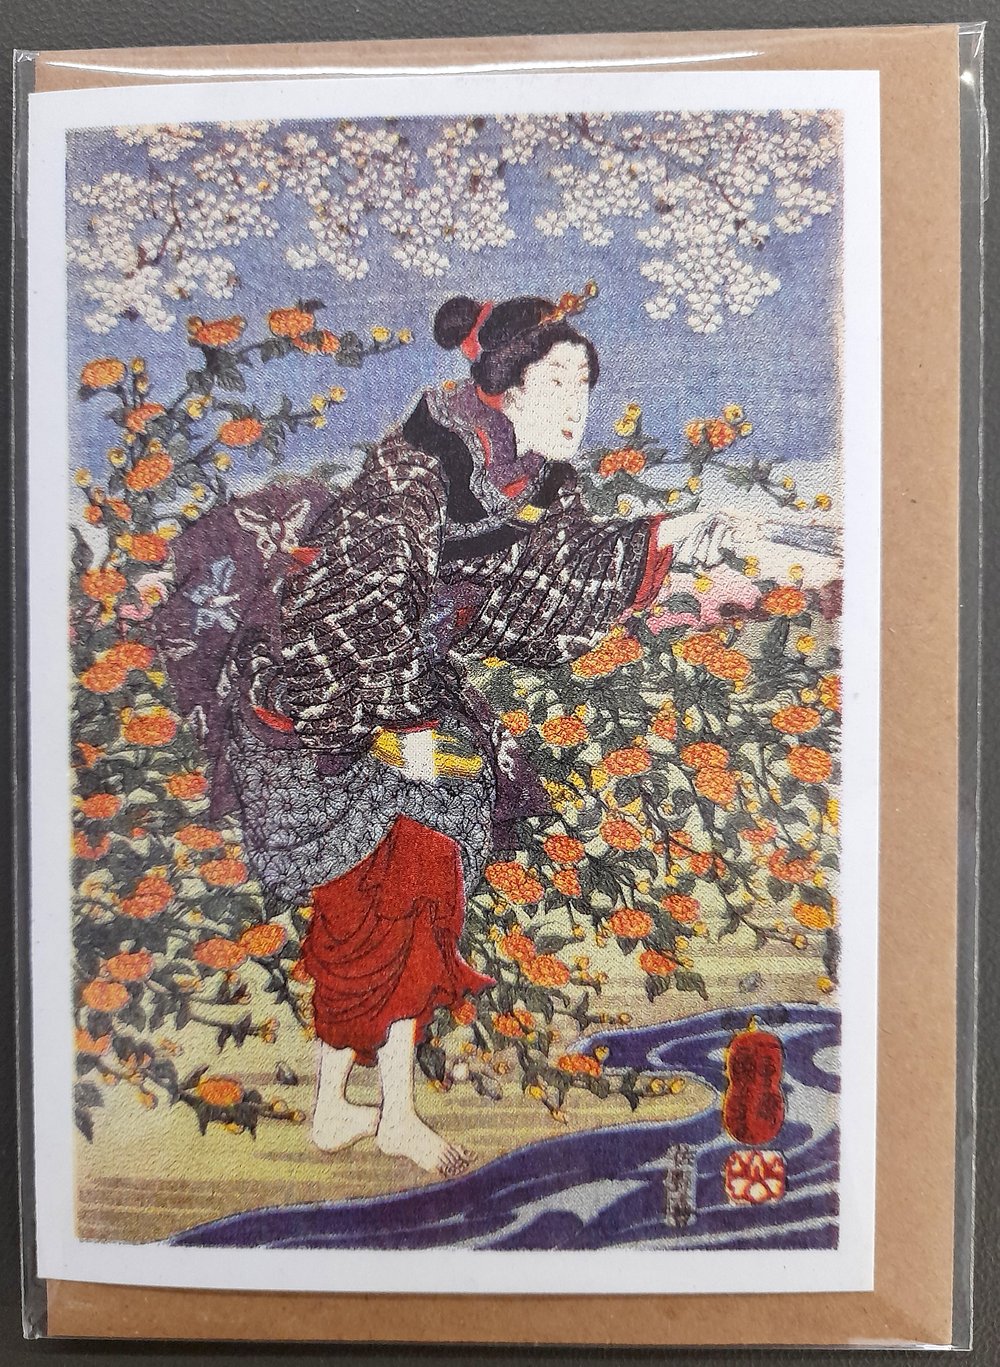 19th Century Japanese Prints Greeting Cards